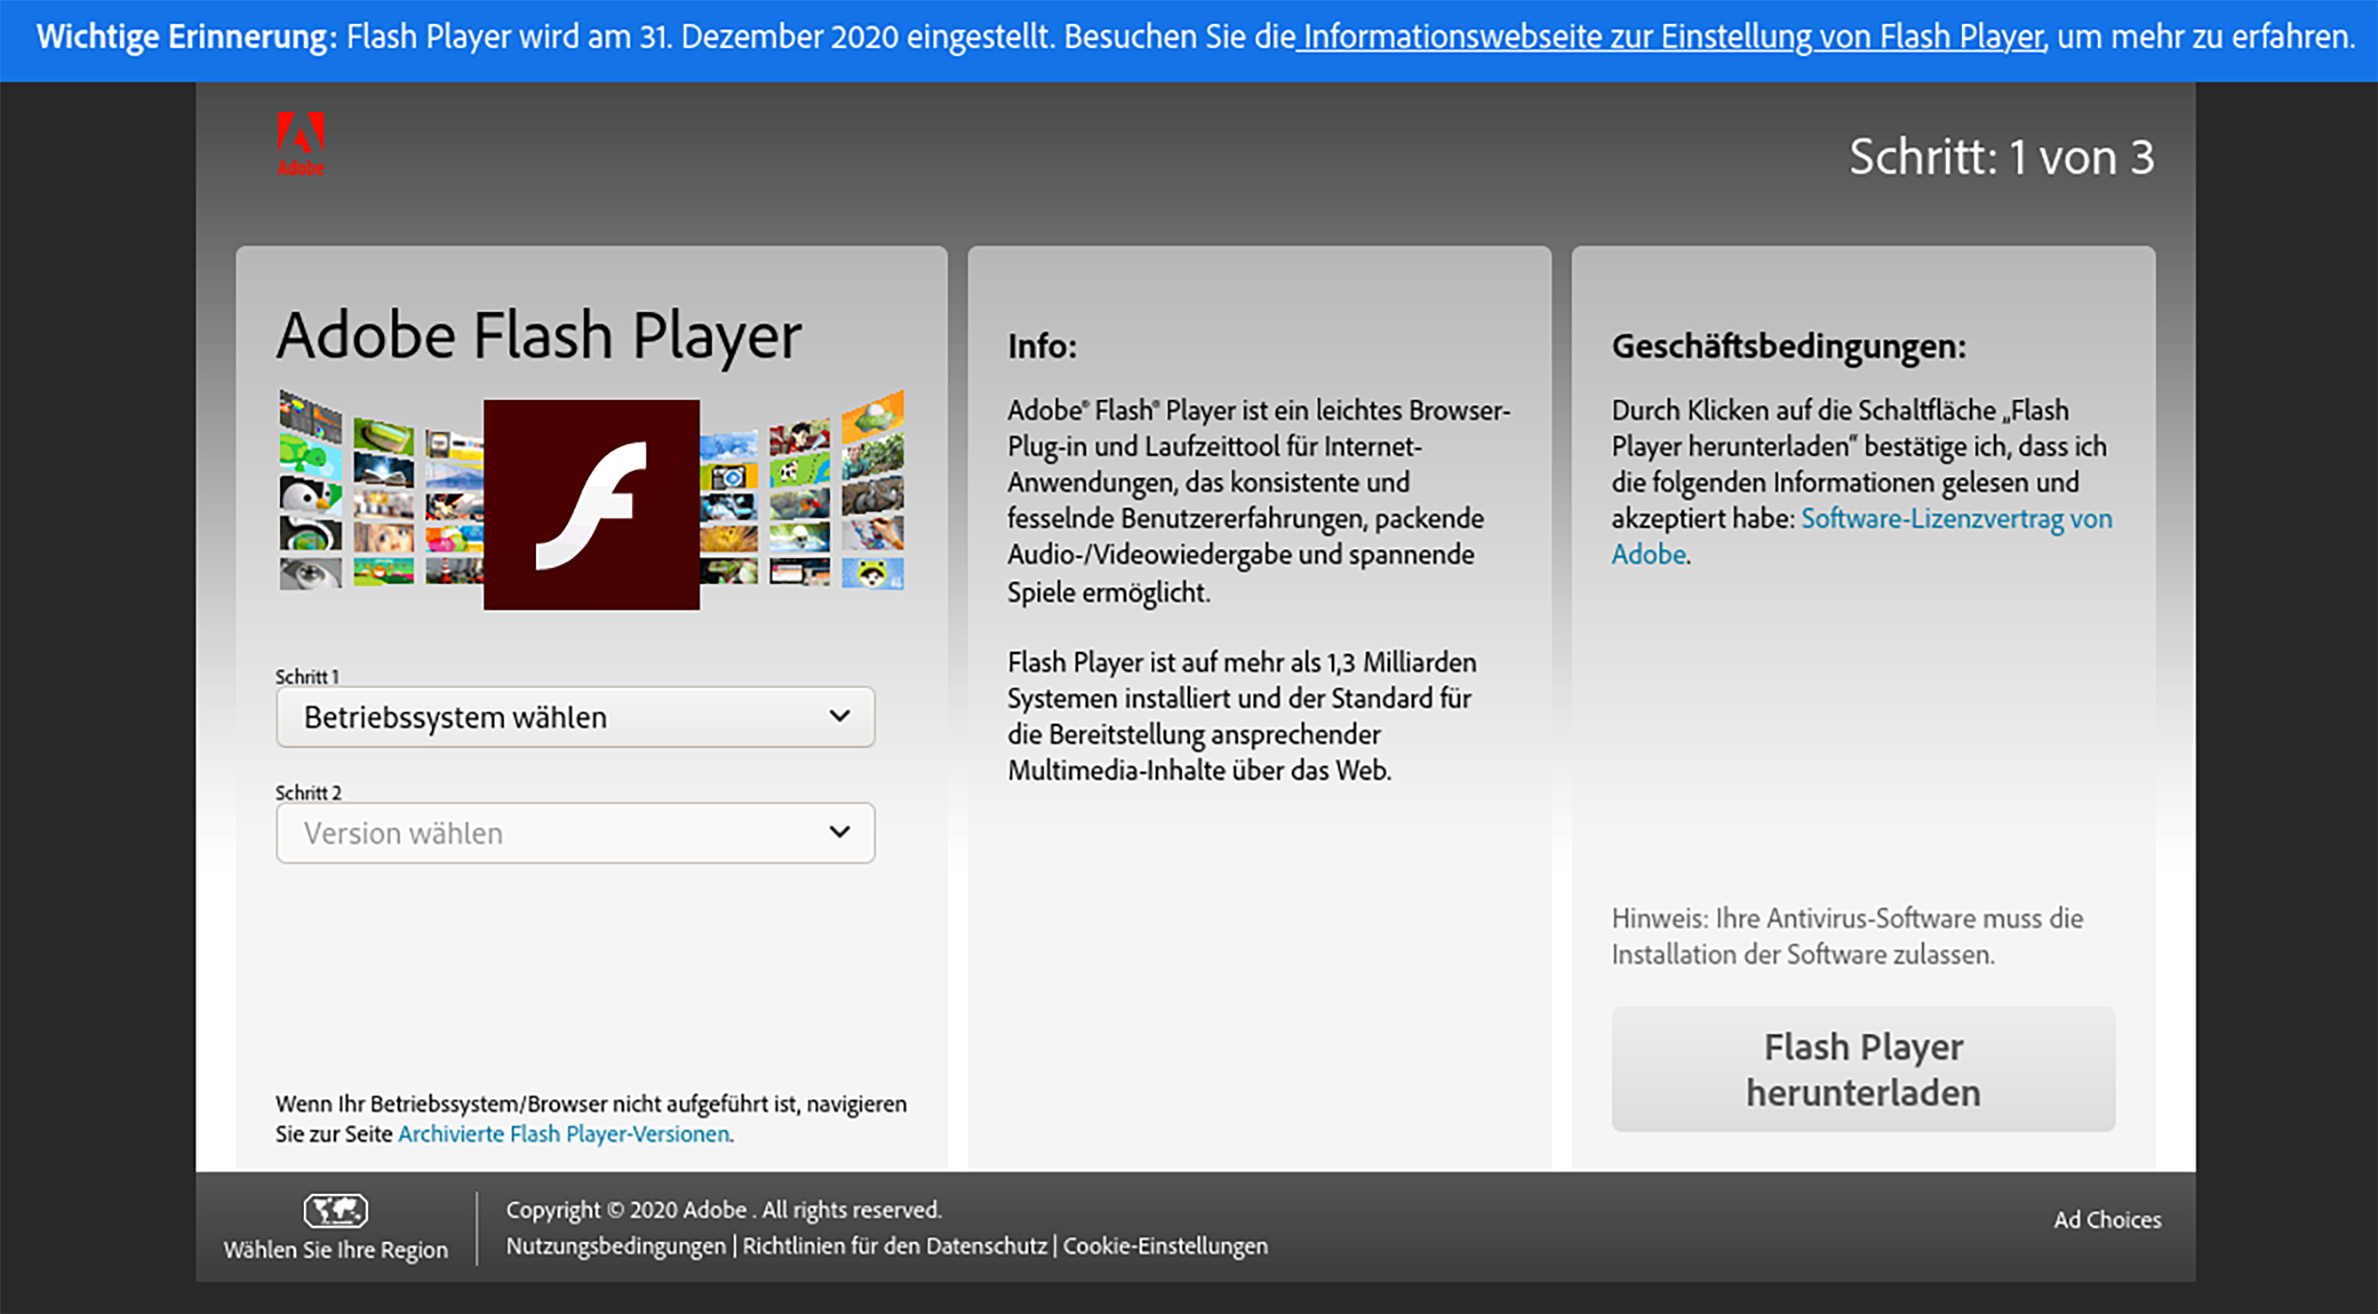 download adobe flash player latest version for windows 7 32 bit